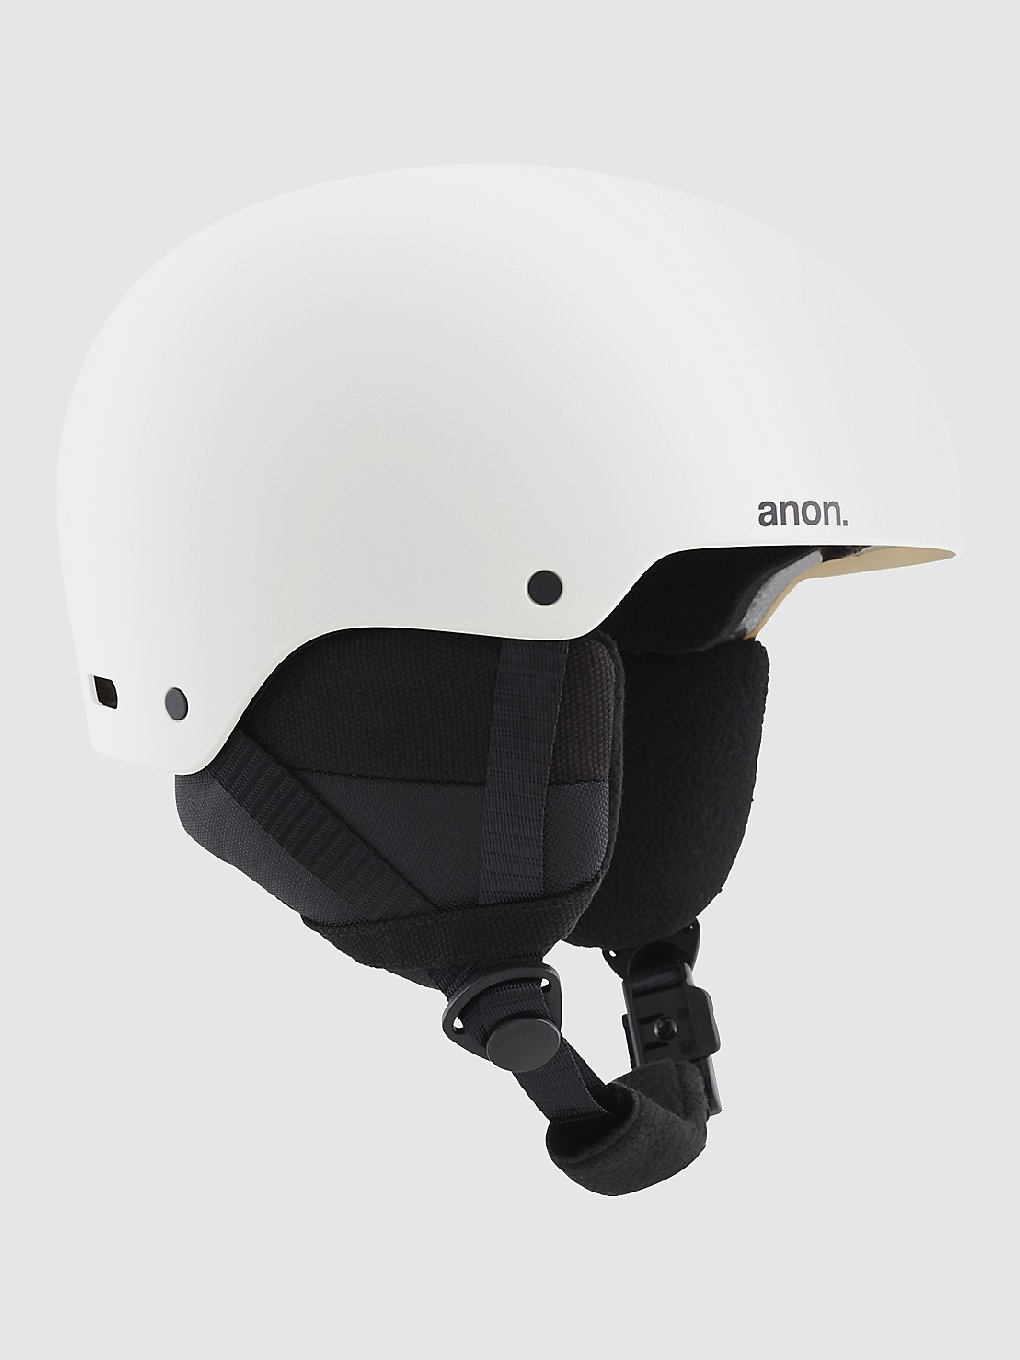 anon rime 3 helm white eu